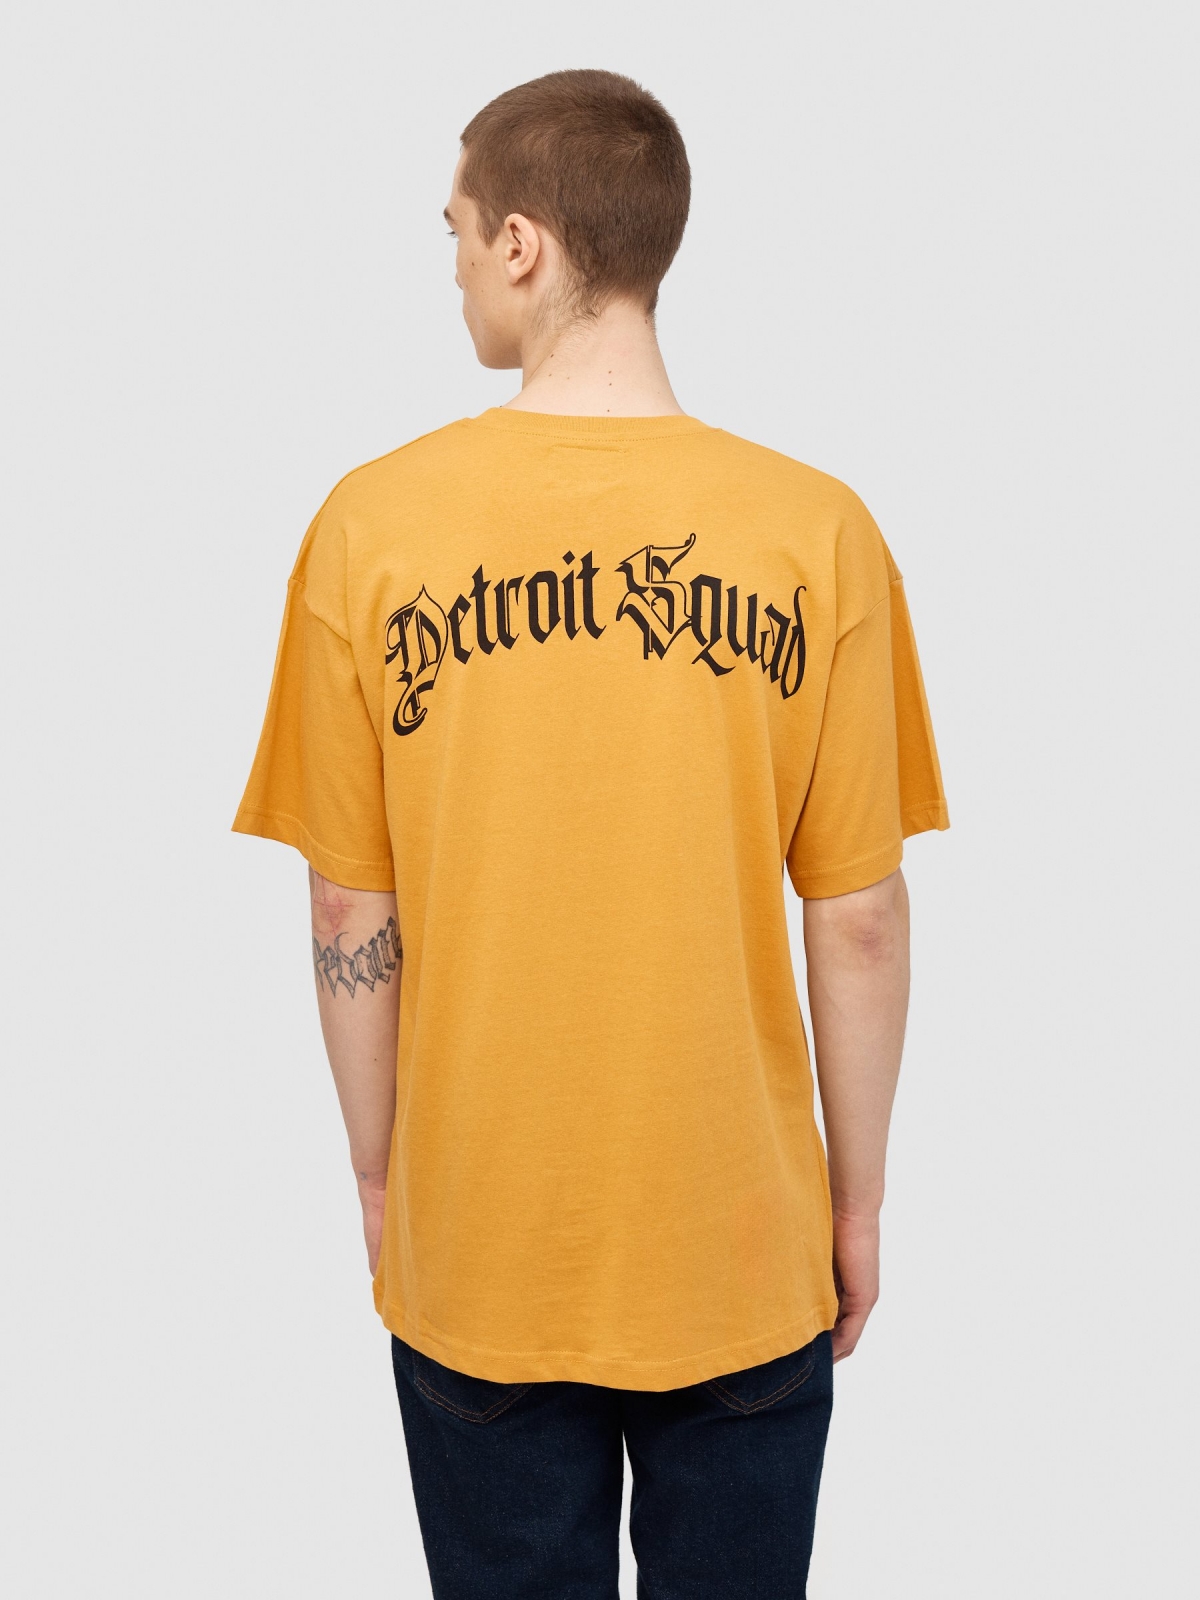 Detroit Squad t-shirt ochre middle back view